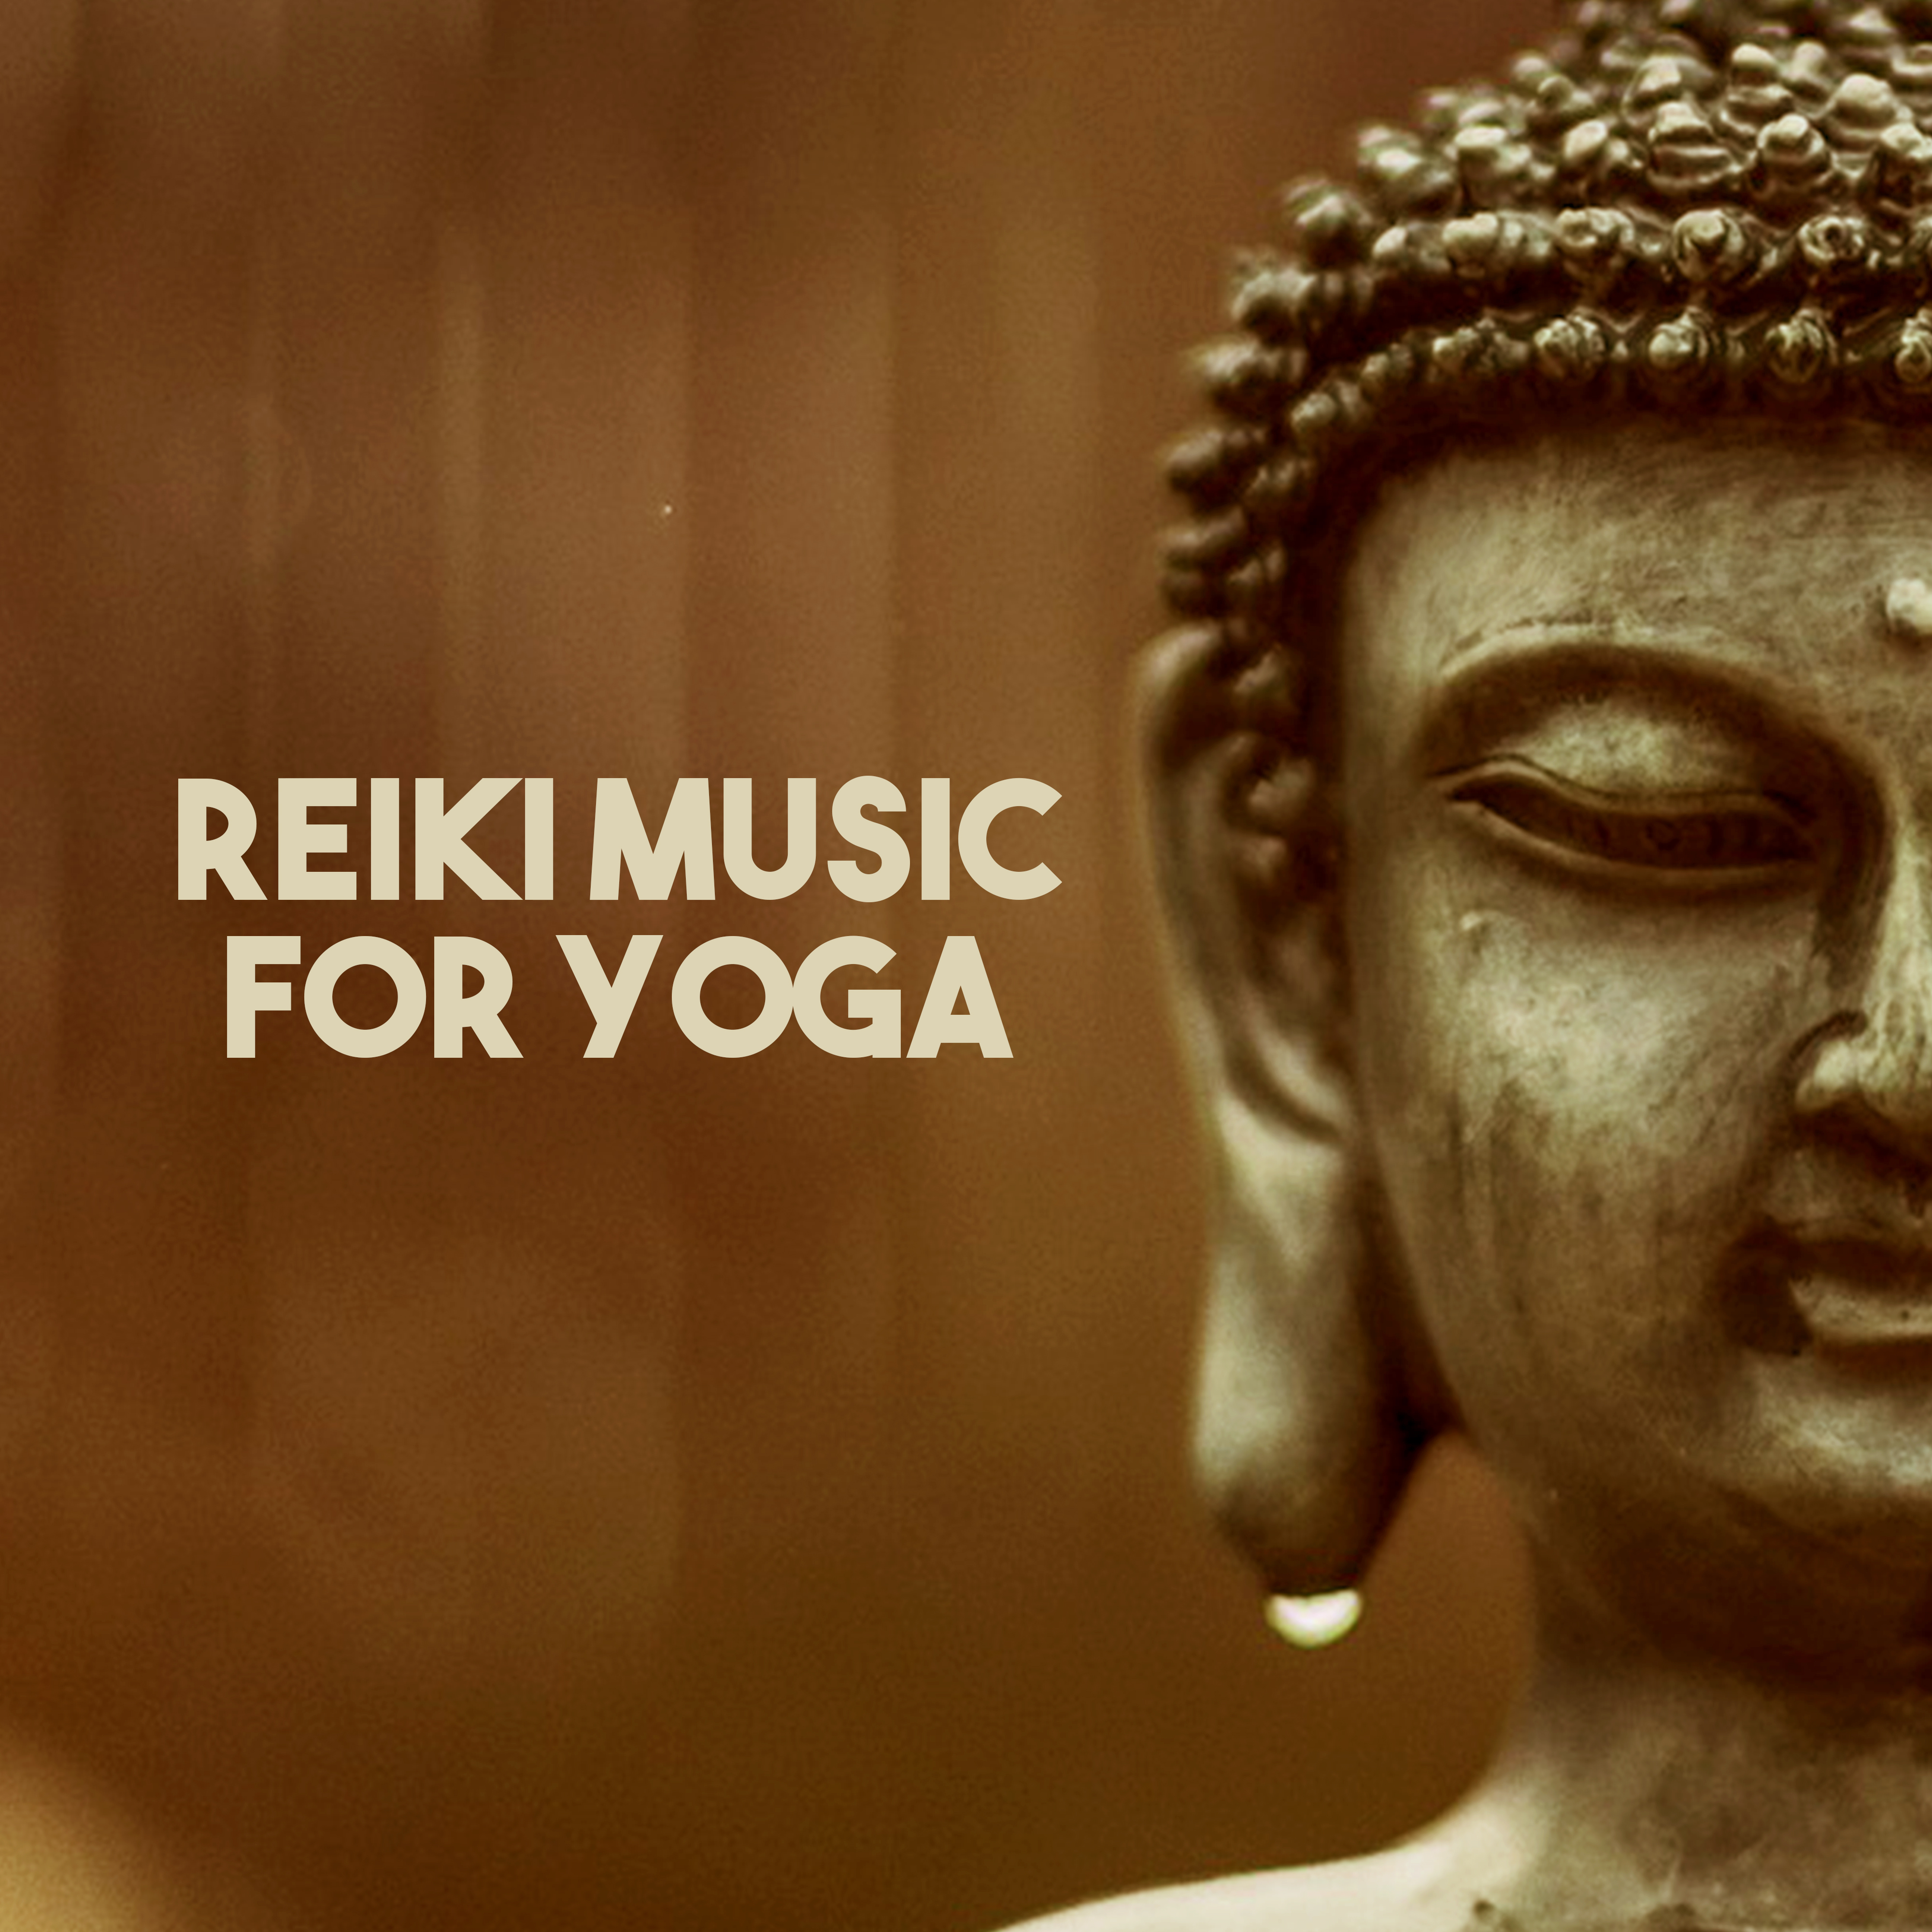 Reiki Music for Yoga  Exercise Mind, Deep Focus, Meditation Music, Nature Sounds for Better Concentration